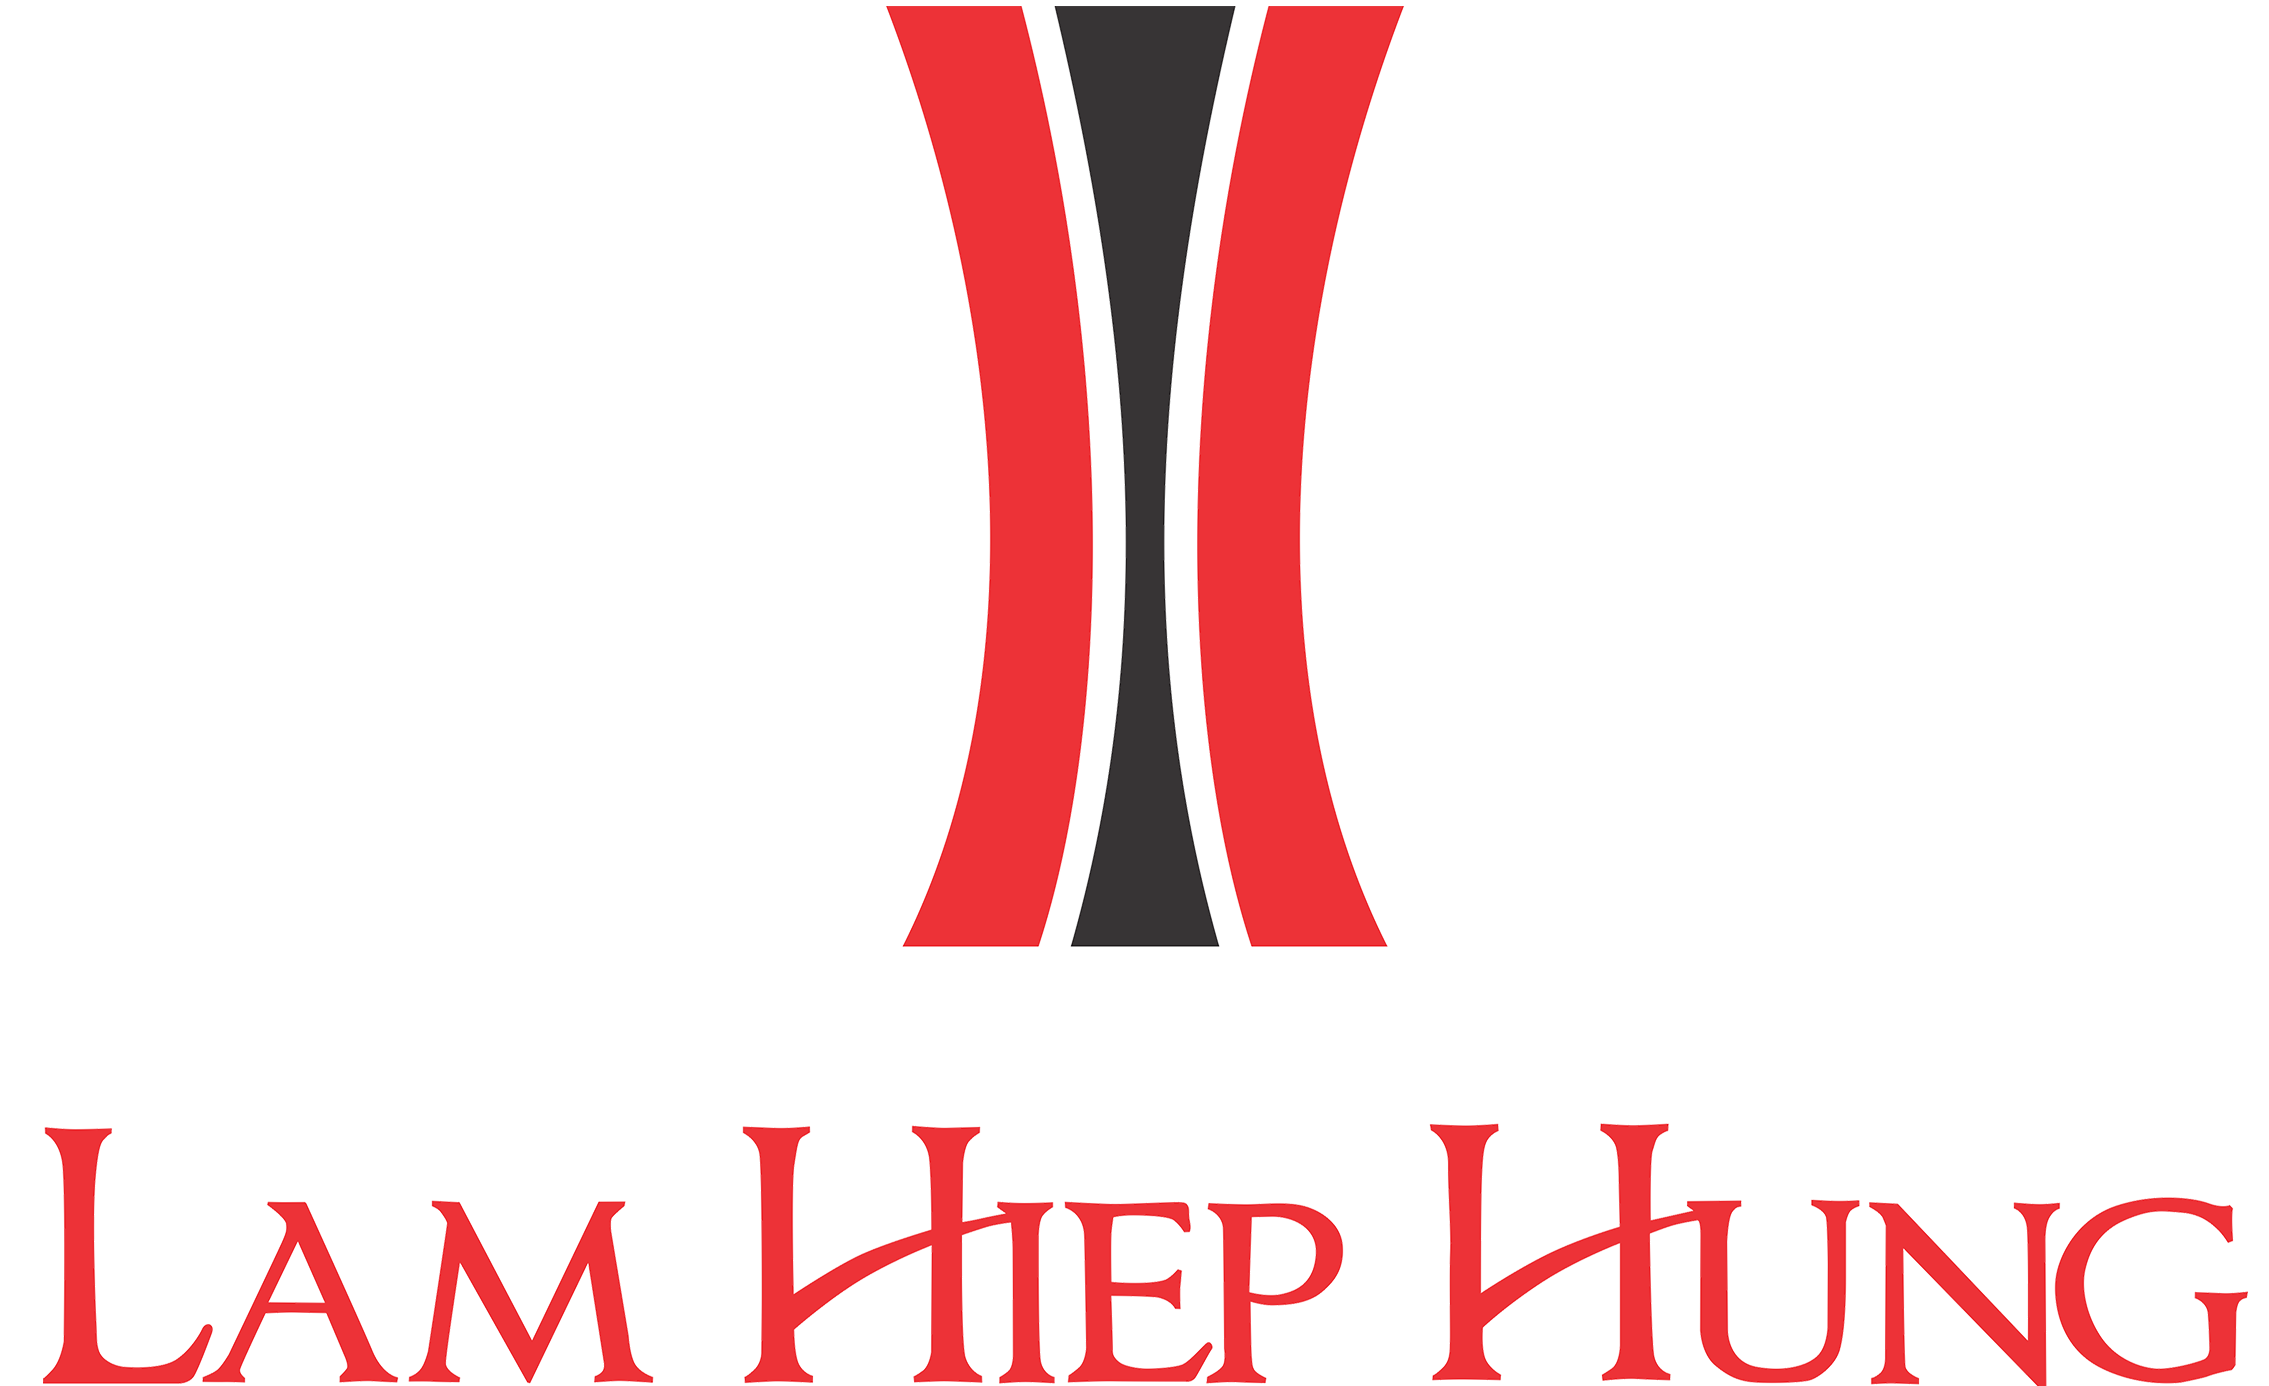 Lam Hiep Hung-logo